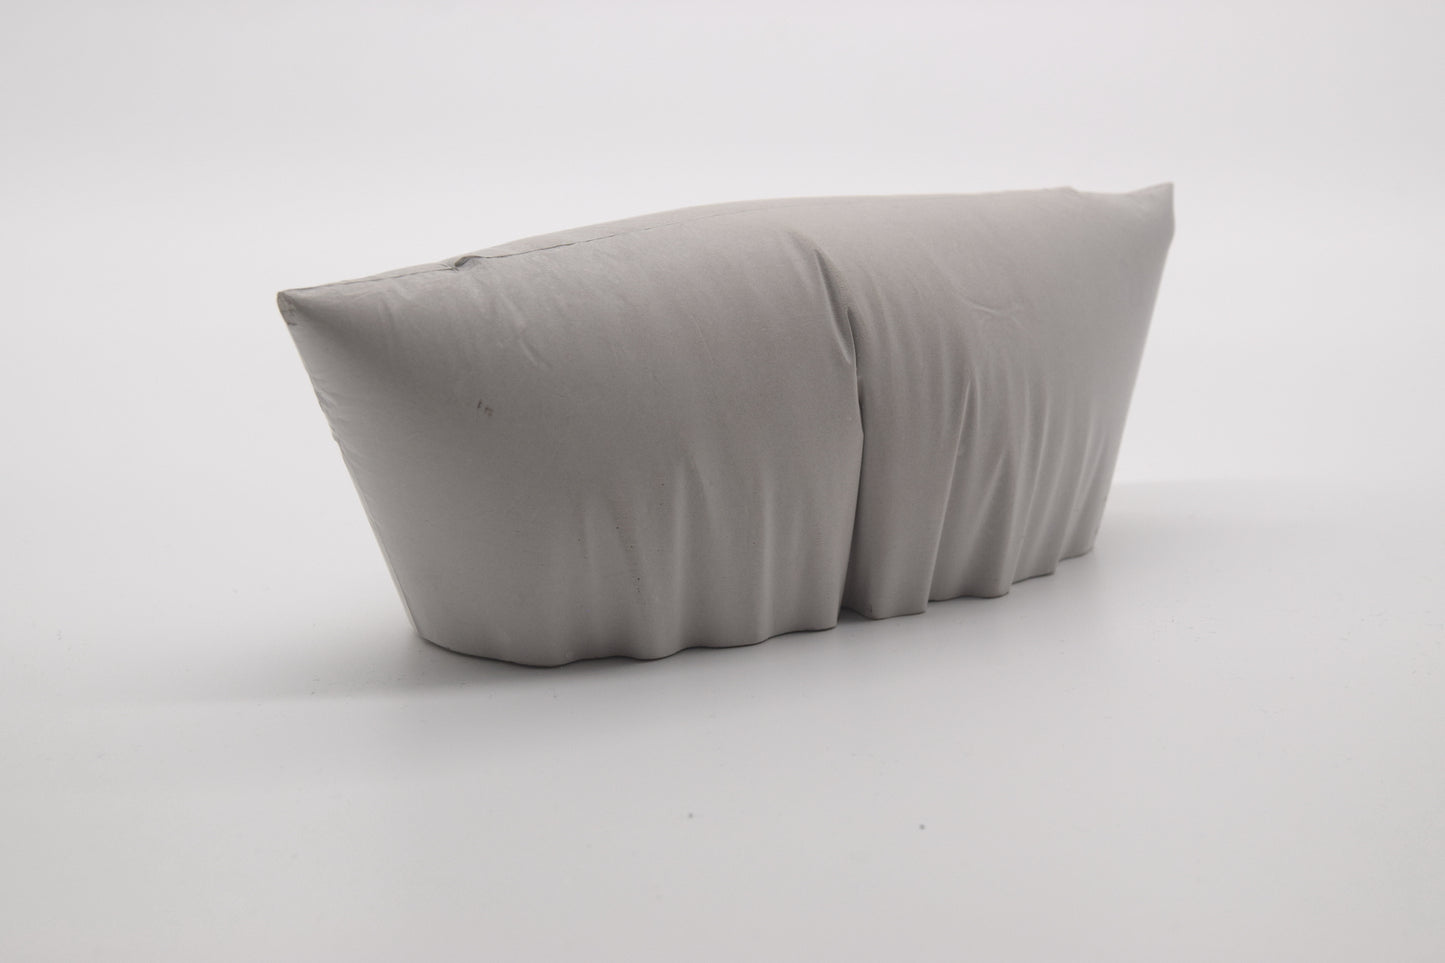 Concrete Pillow #01